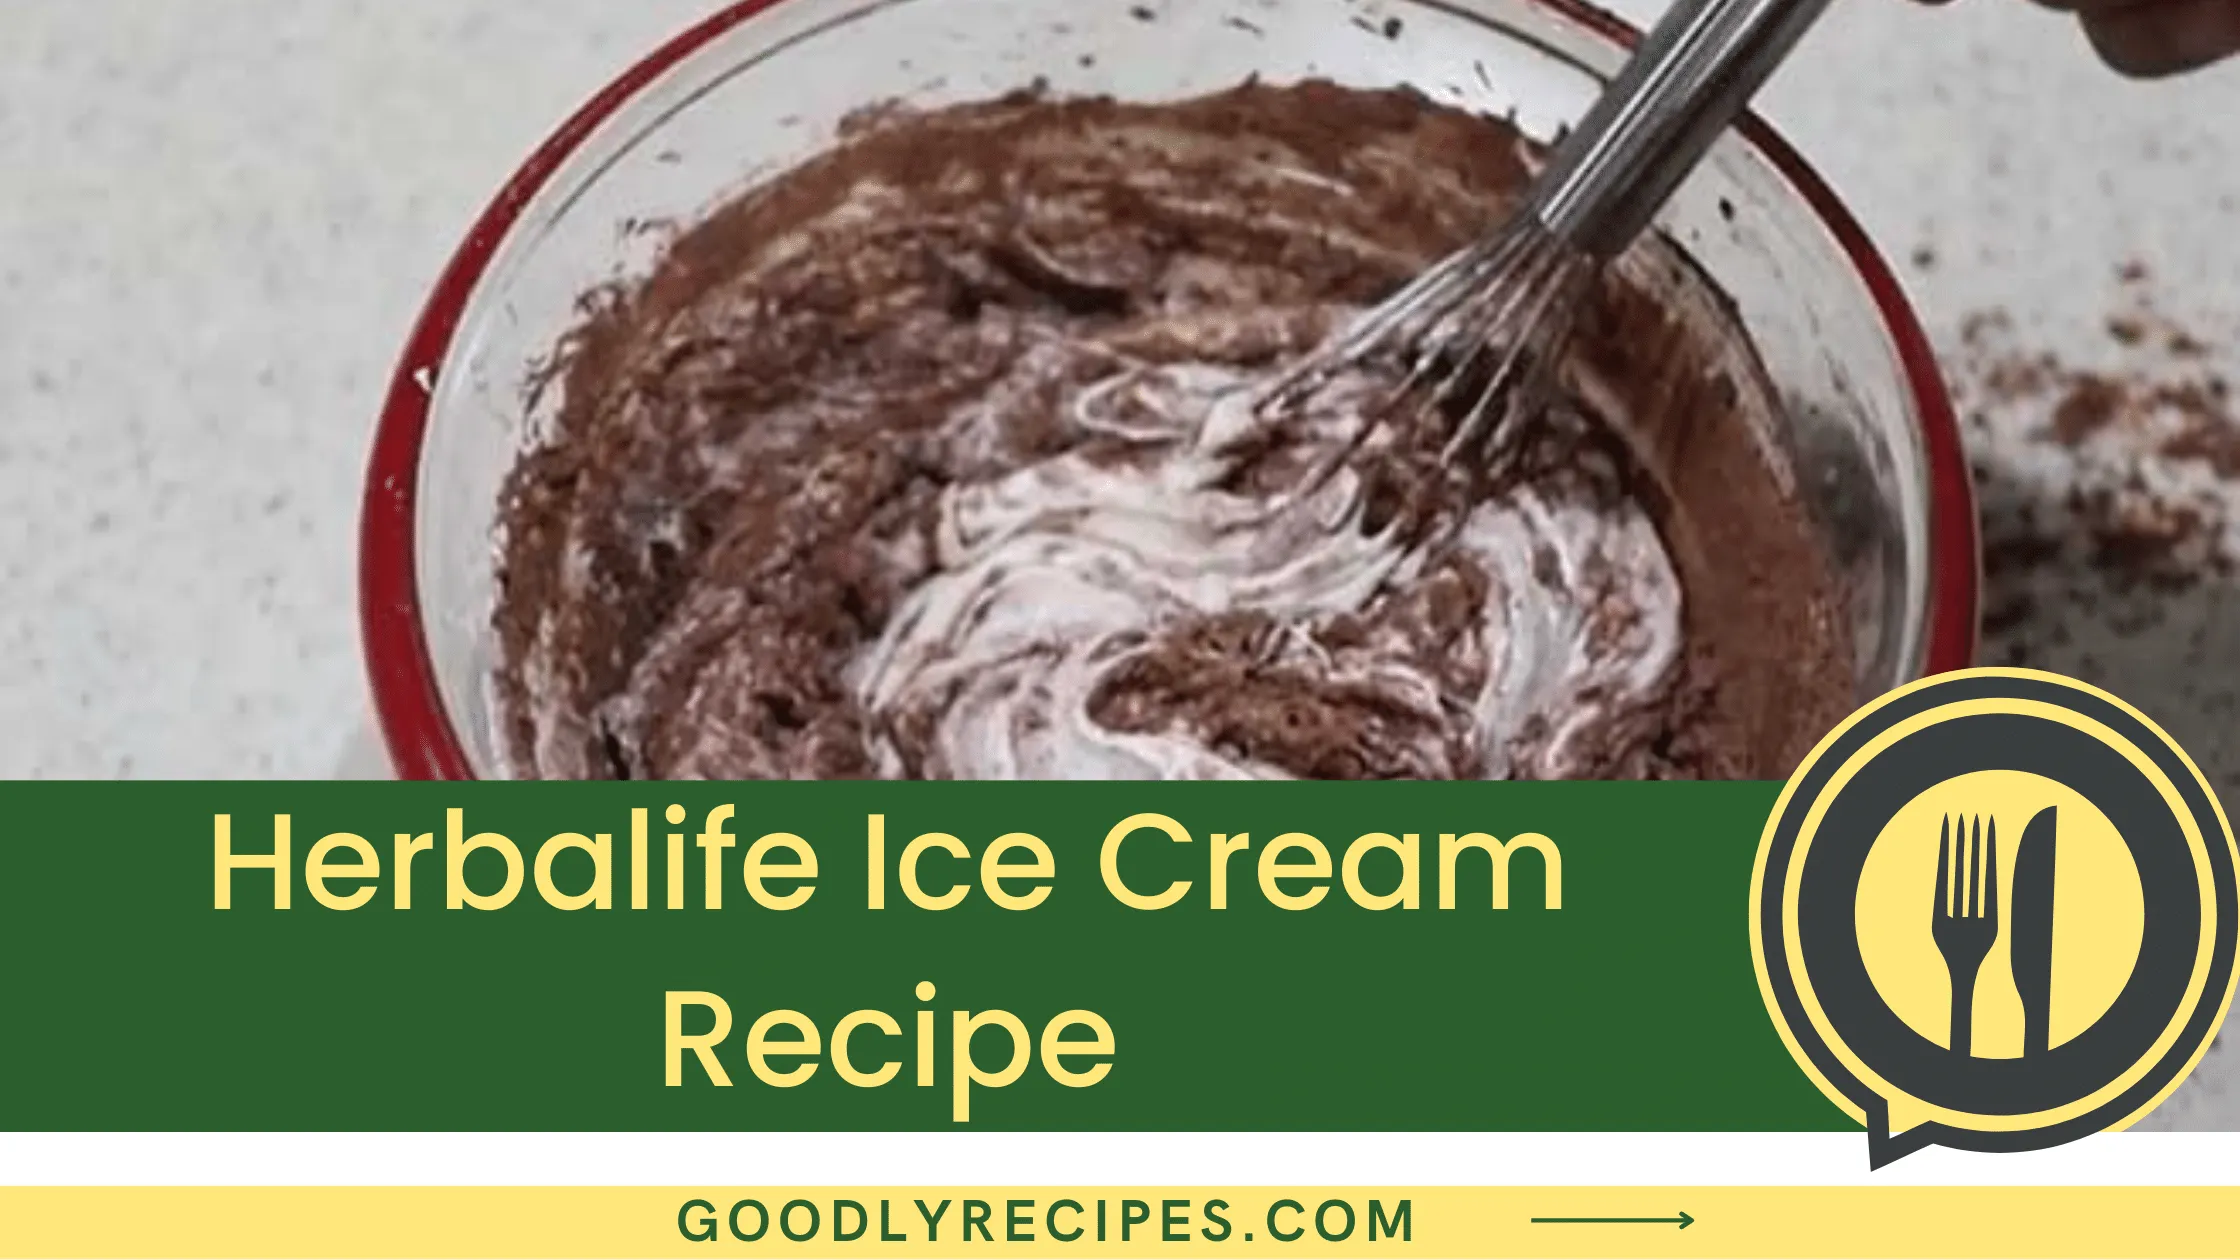 Herbalife Ice Cream Recipe - For Food Lovers